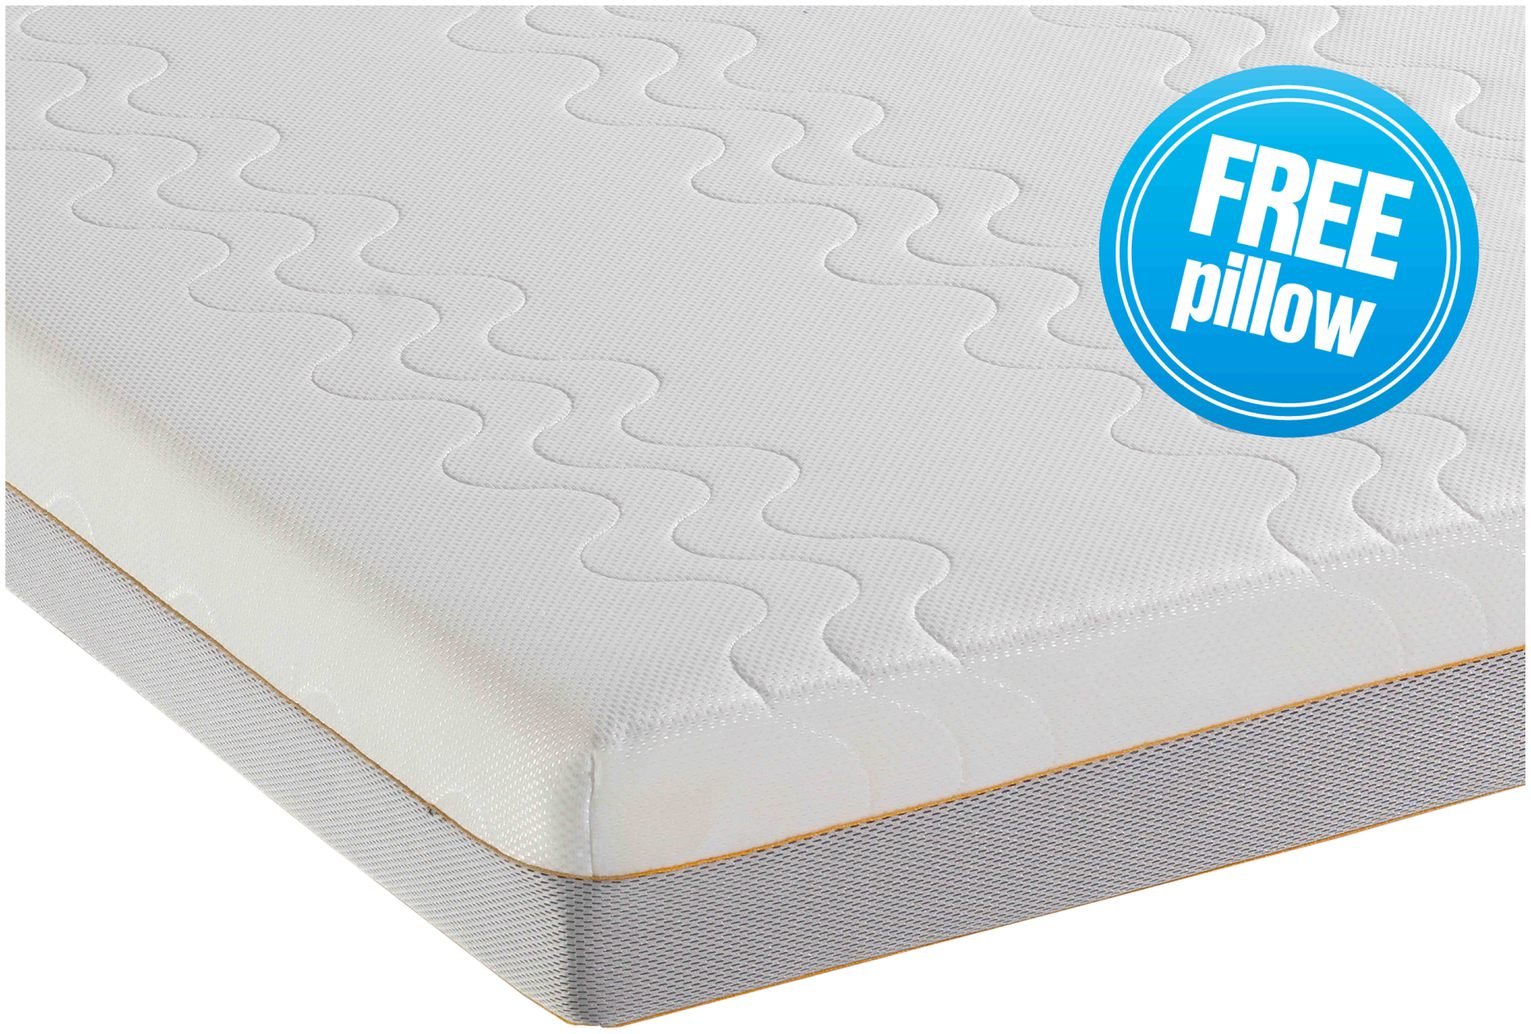 options to make foam mattress breathe